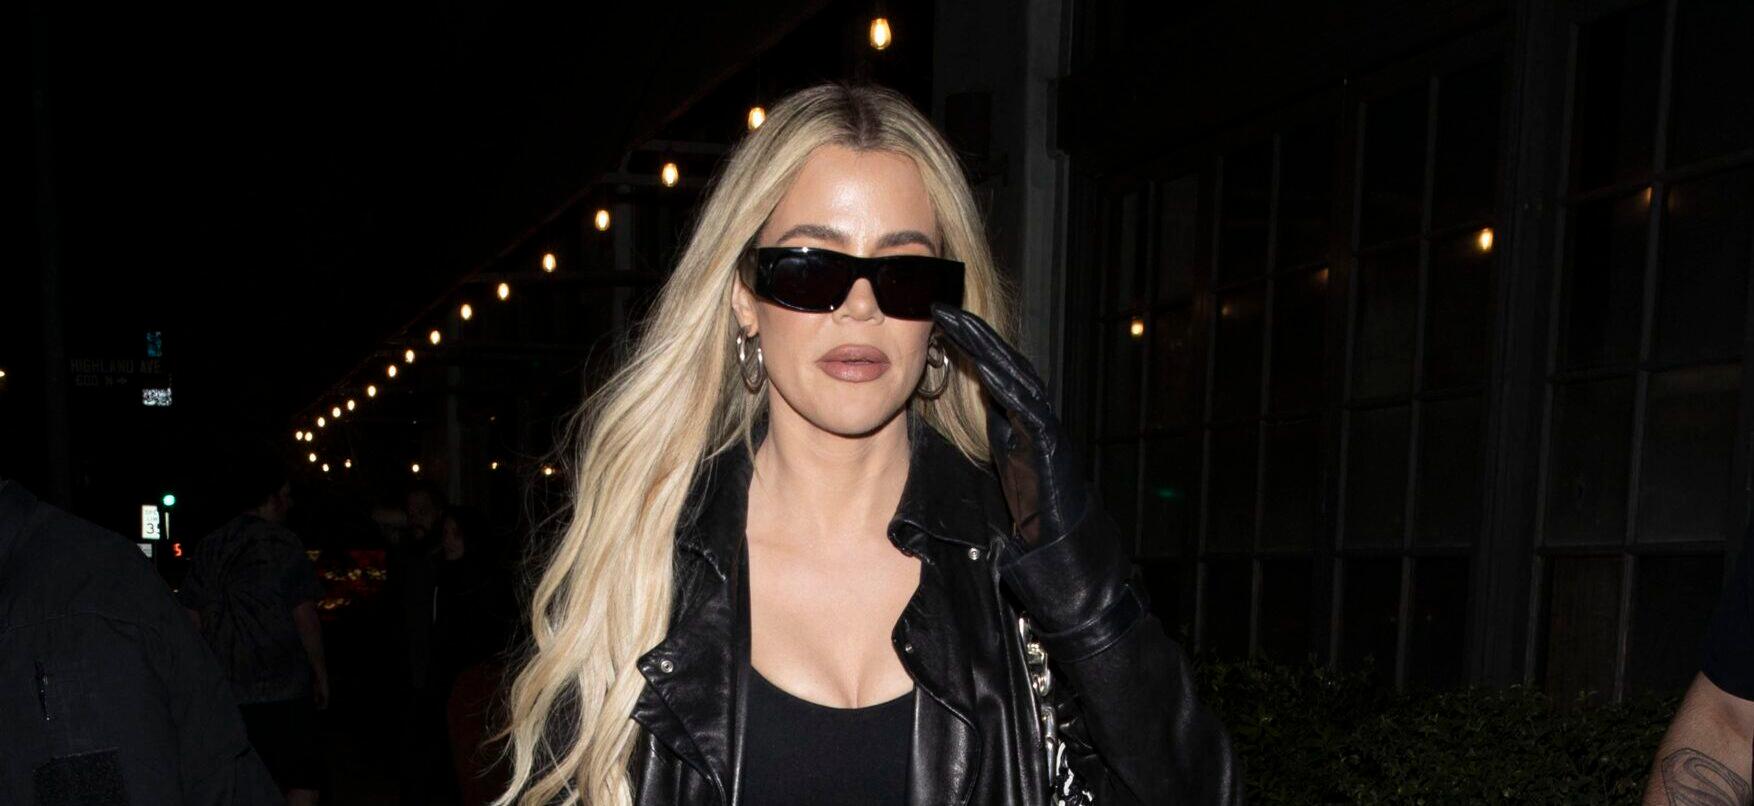 Khloe Kardashian leave dinner together at Osteria Mozza Italian Restaurant in Hollywood,